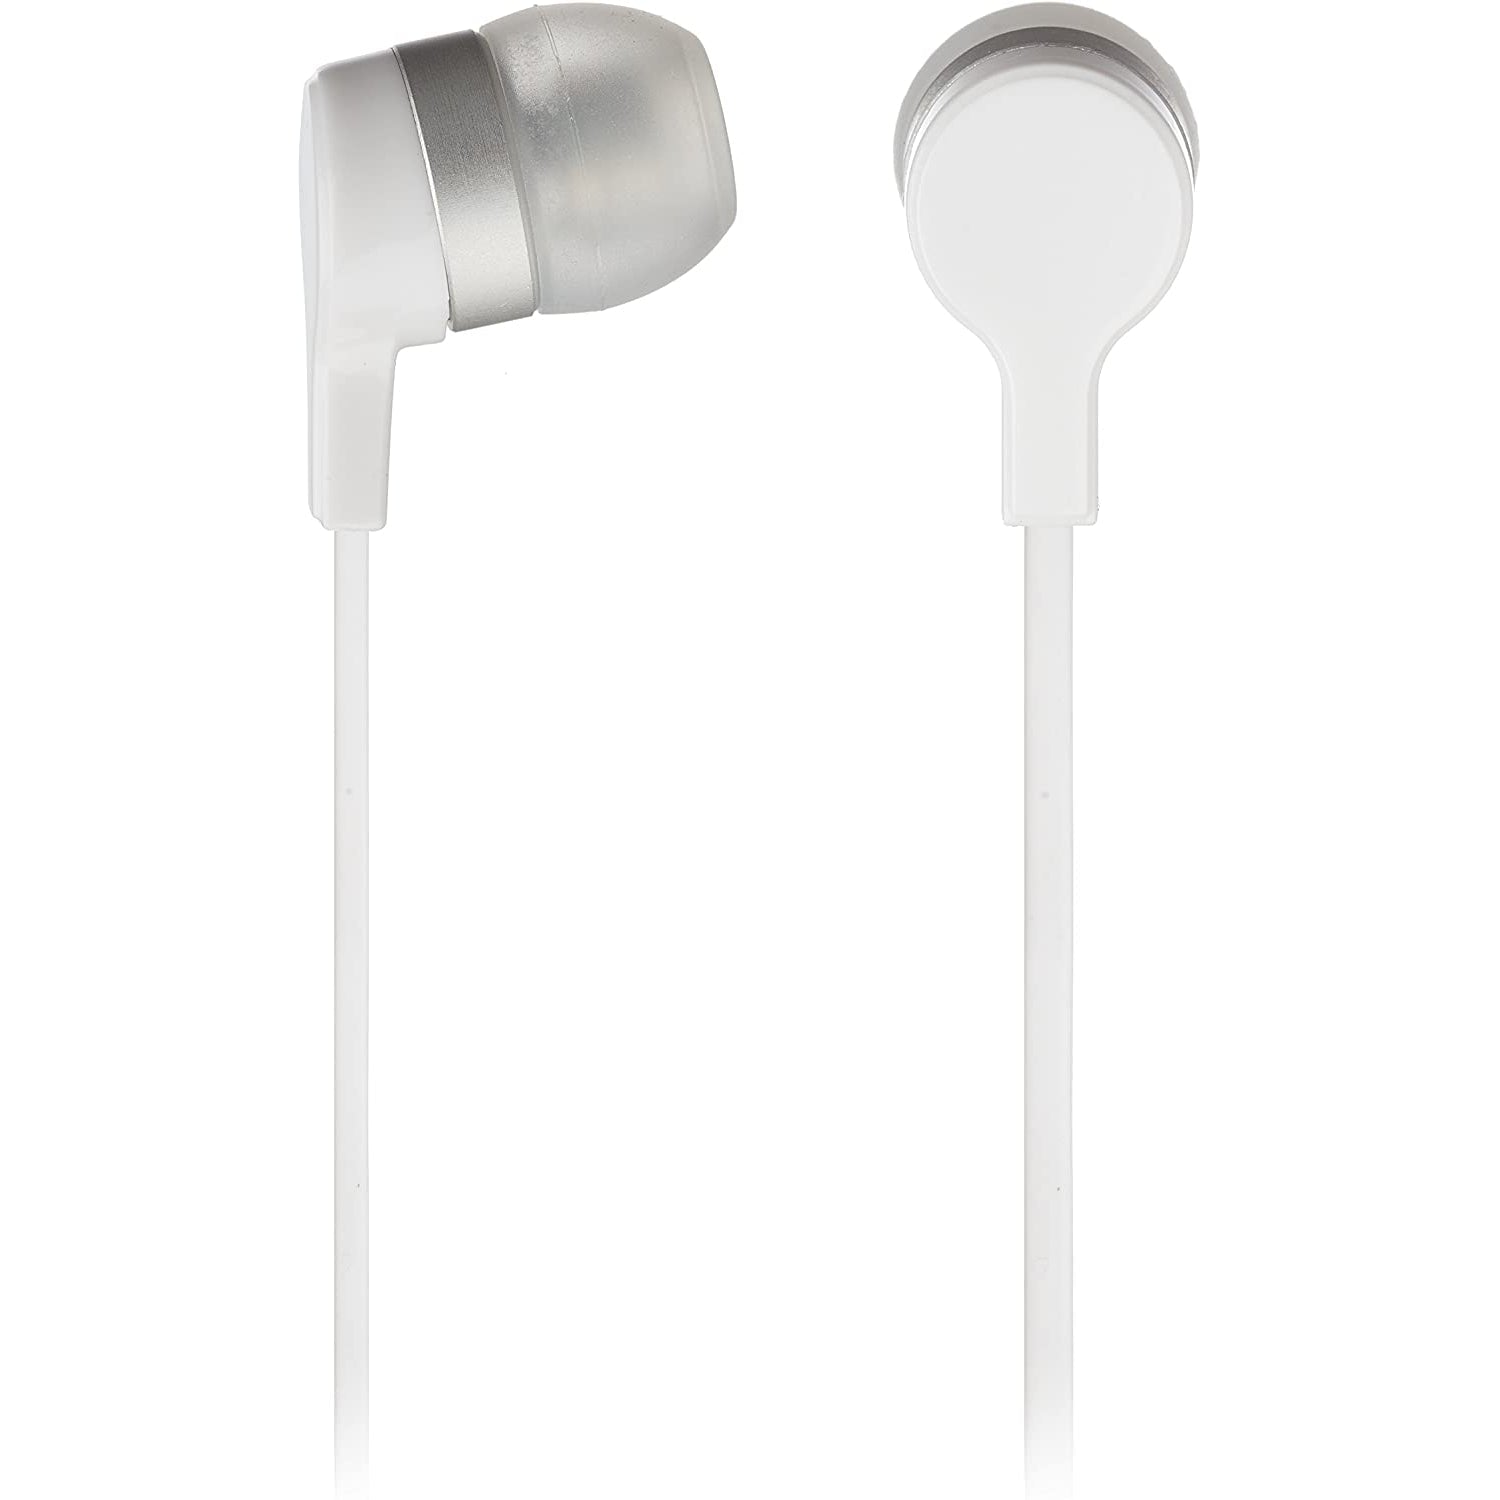 KitSound Mini In-Ear Headphones with In-Line Mic - White - Refurbished Pristine